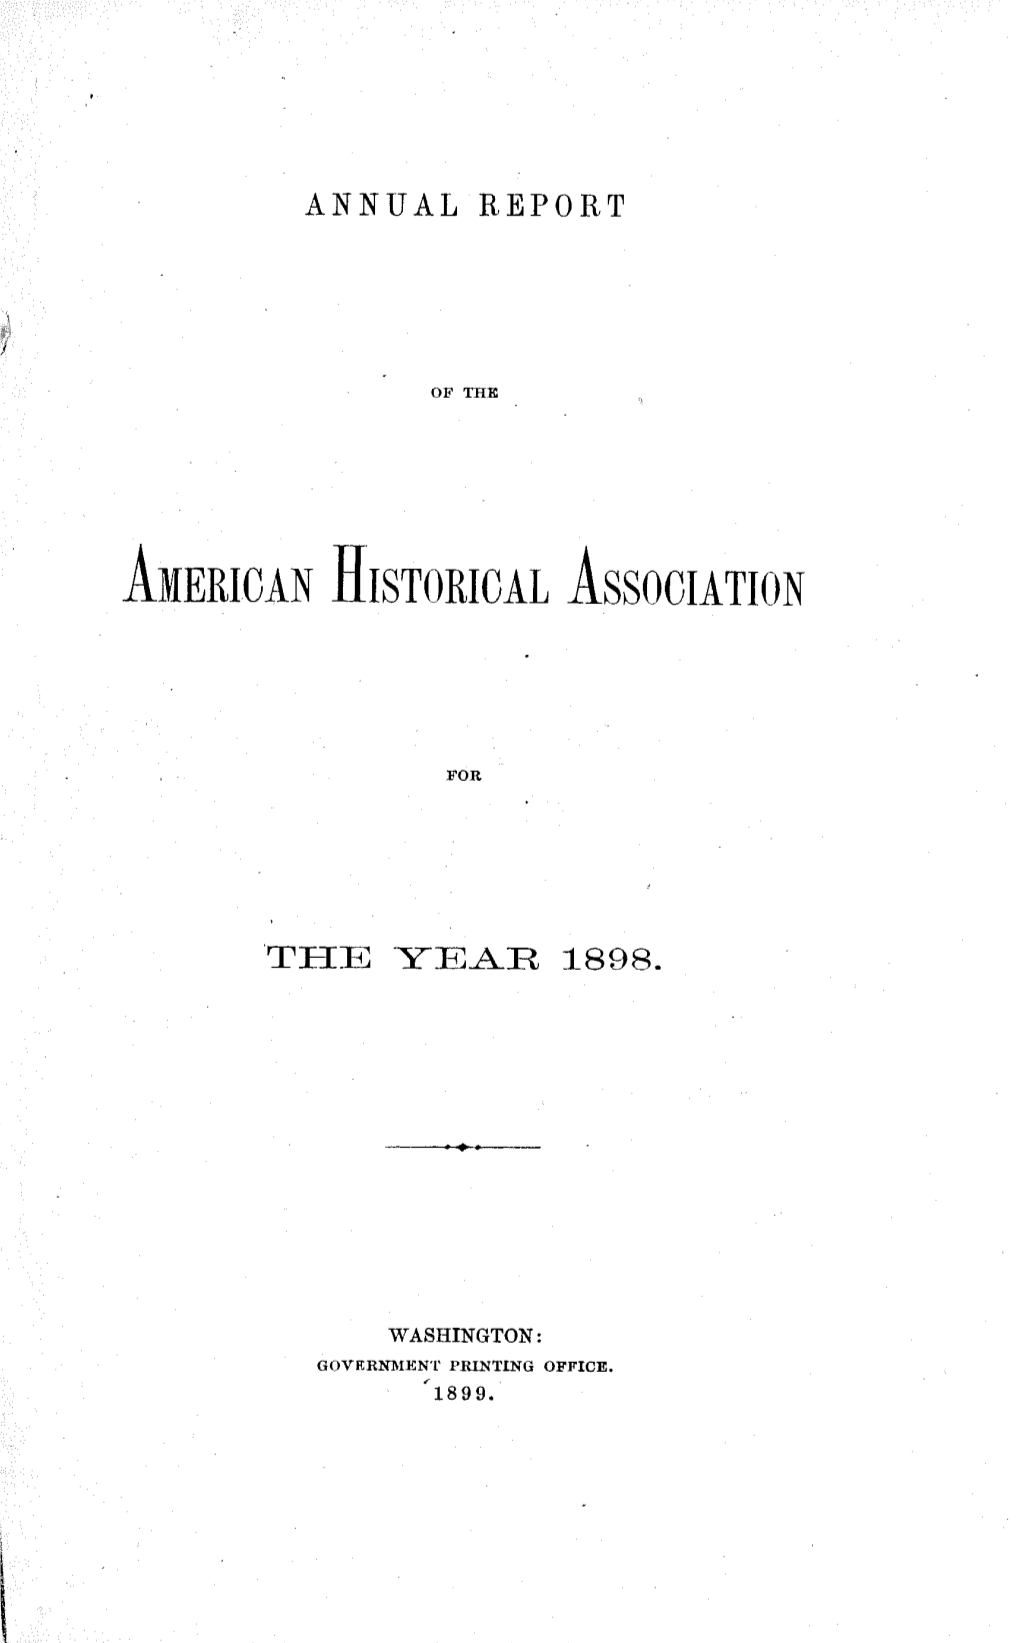 American Historical Association